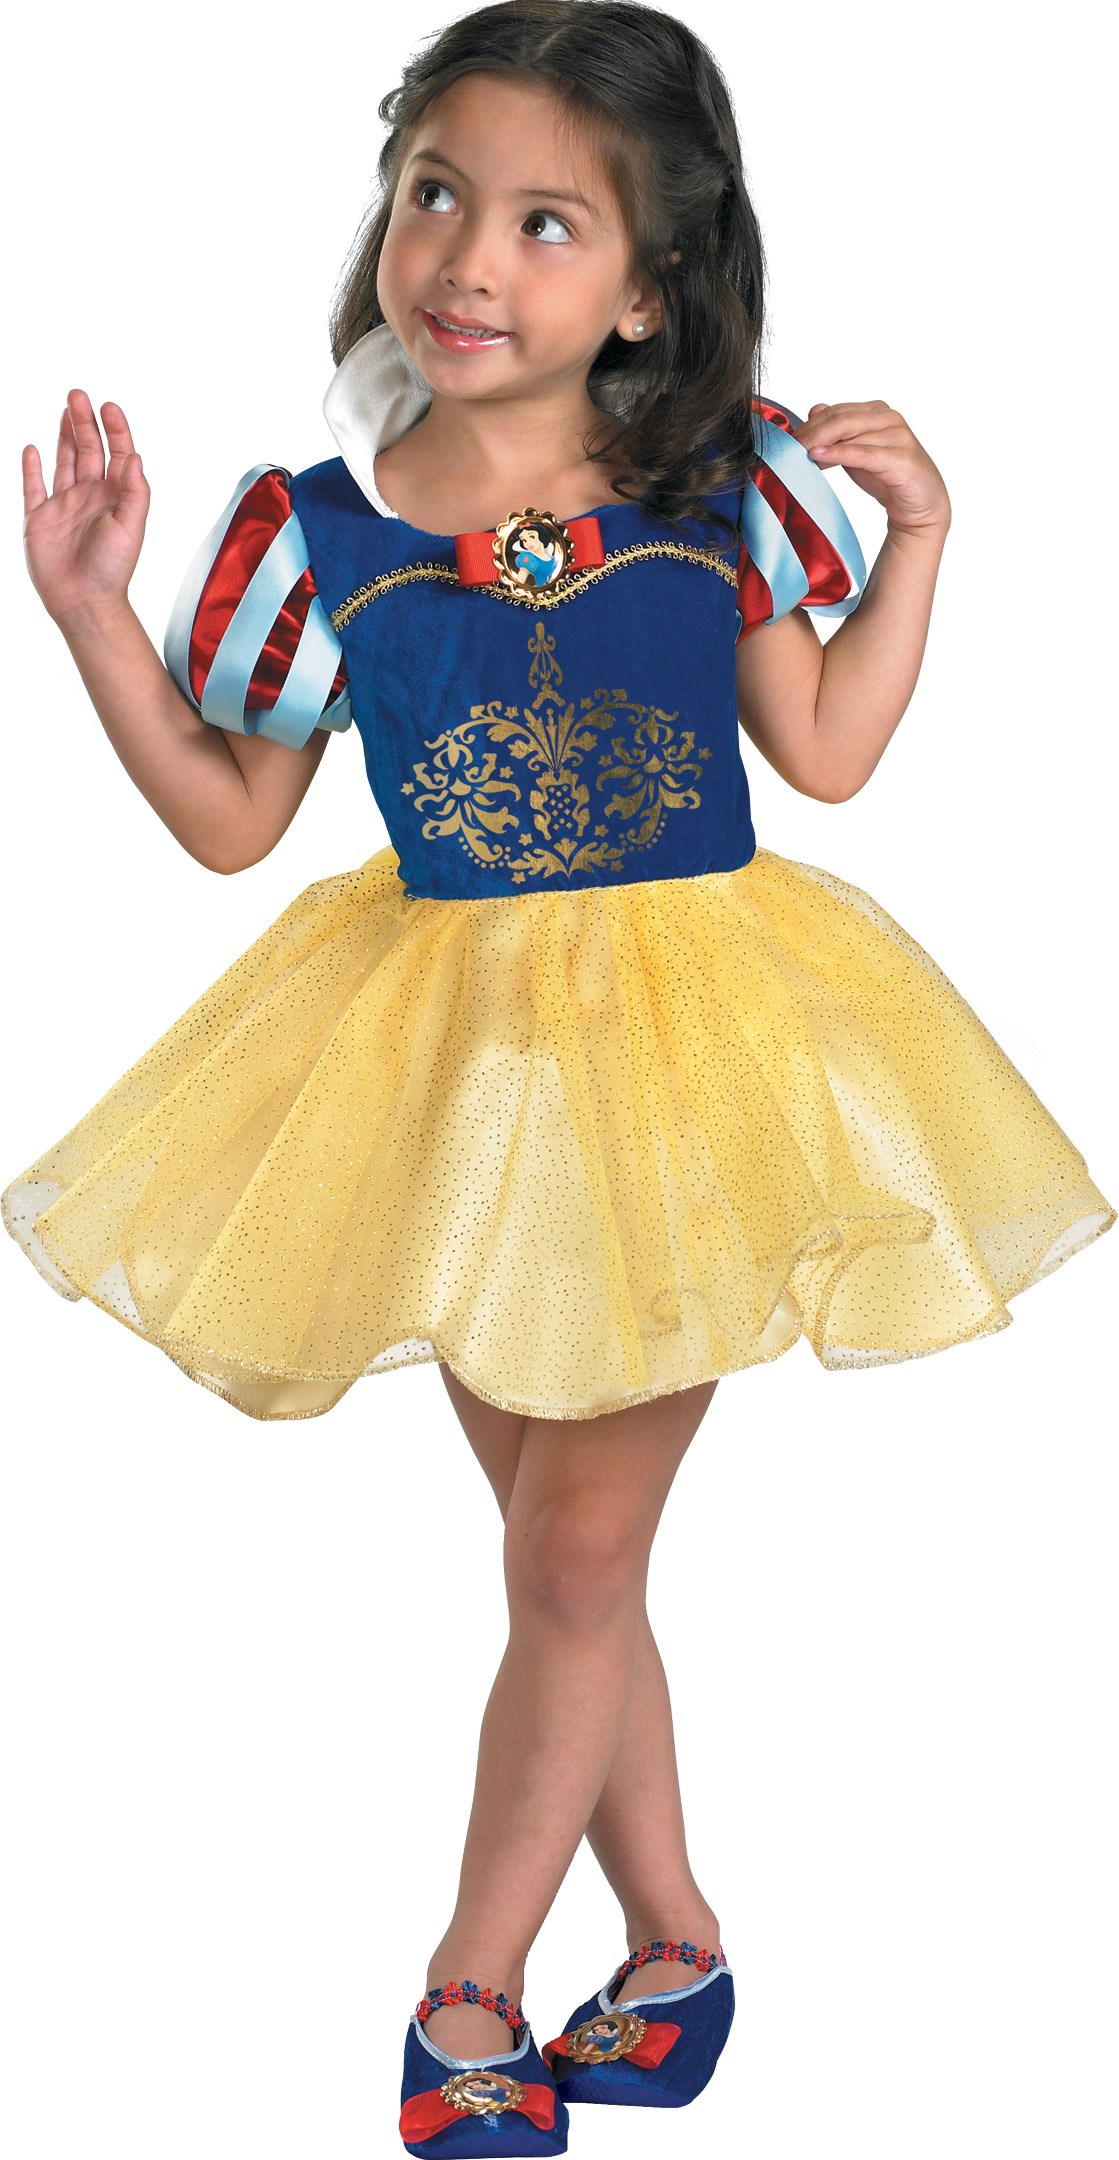 Snow White and the Seven Dwarfs Snow White Ballerina Classic Toddler / Child Costume